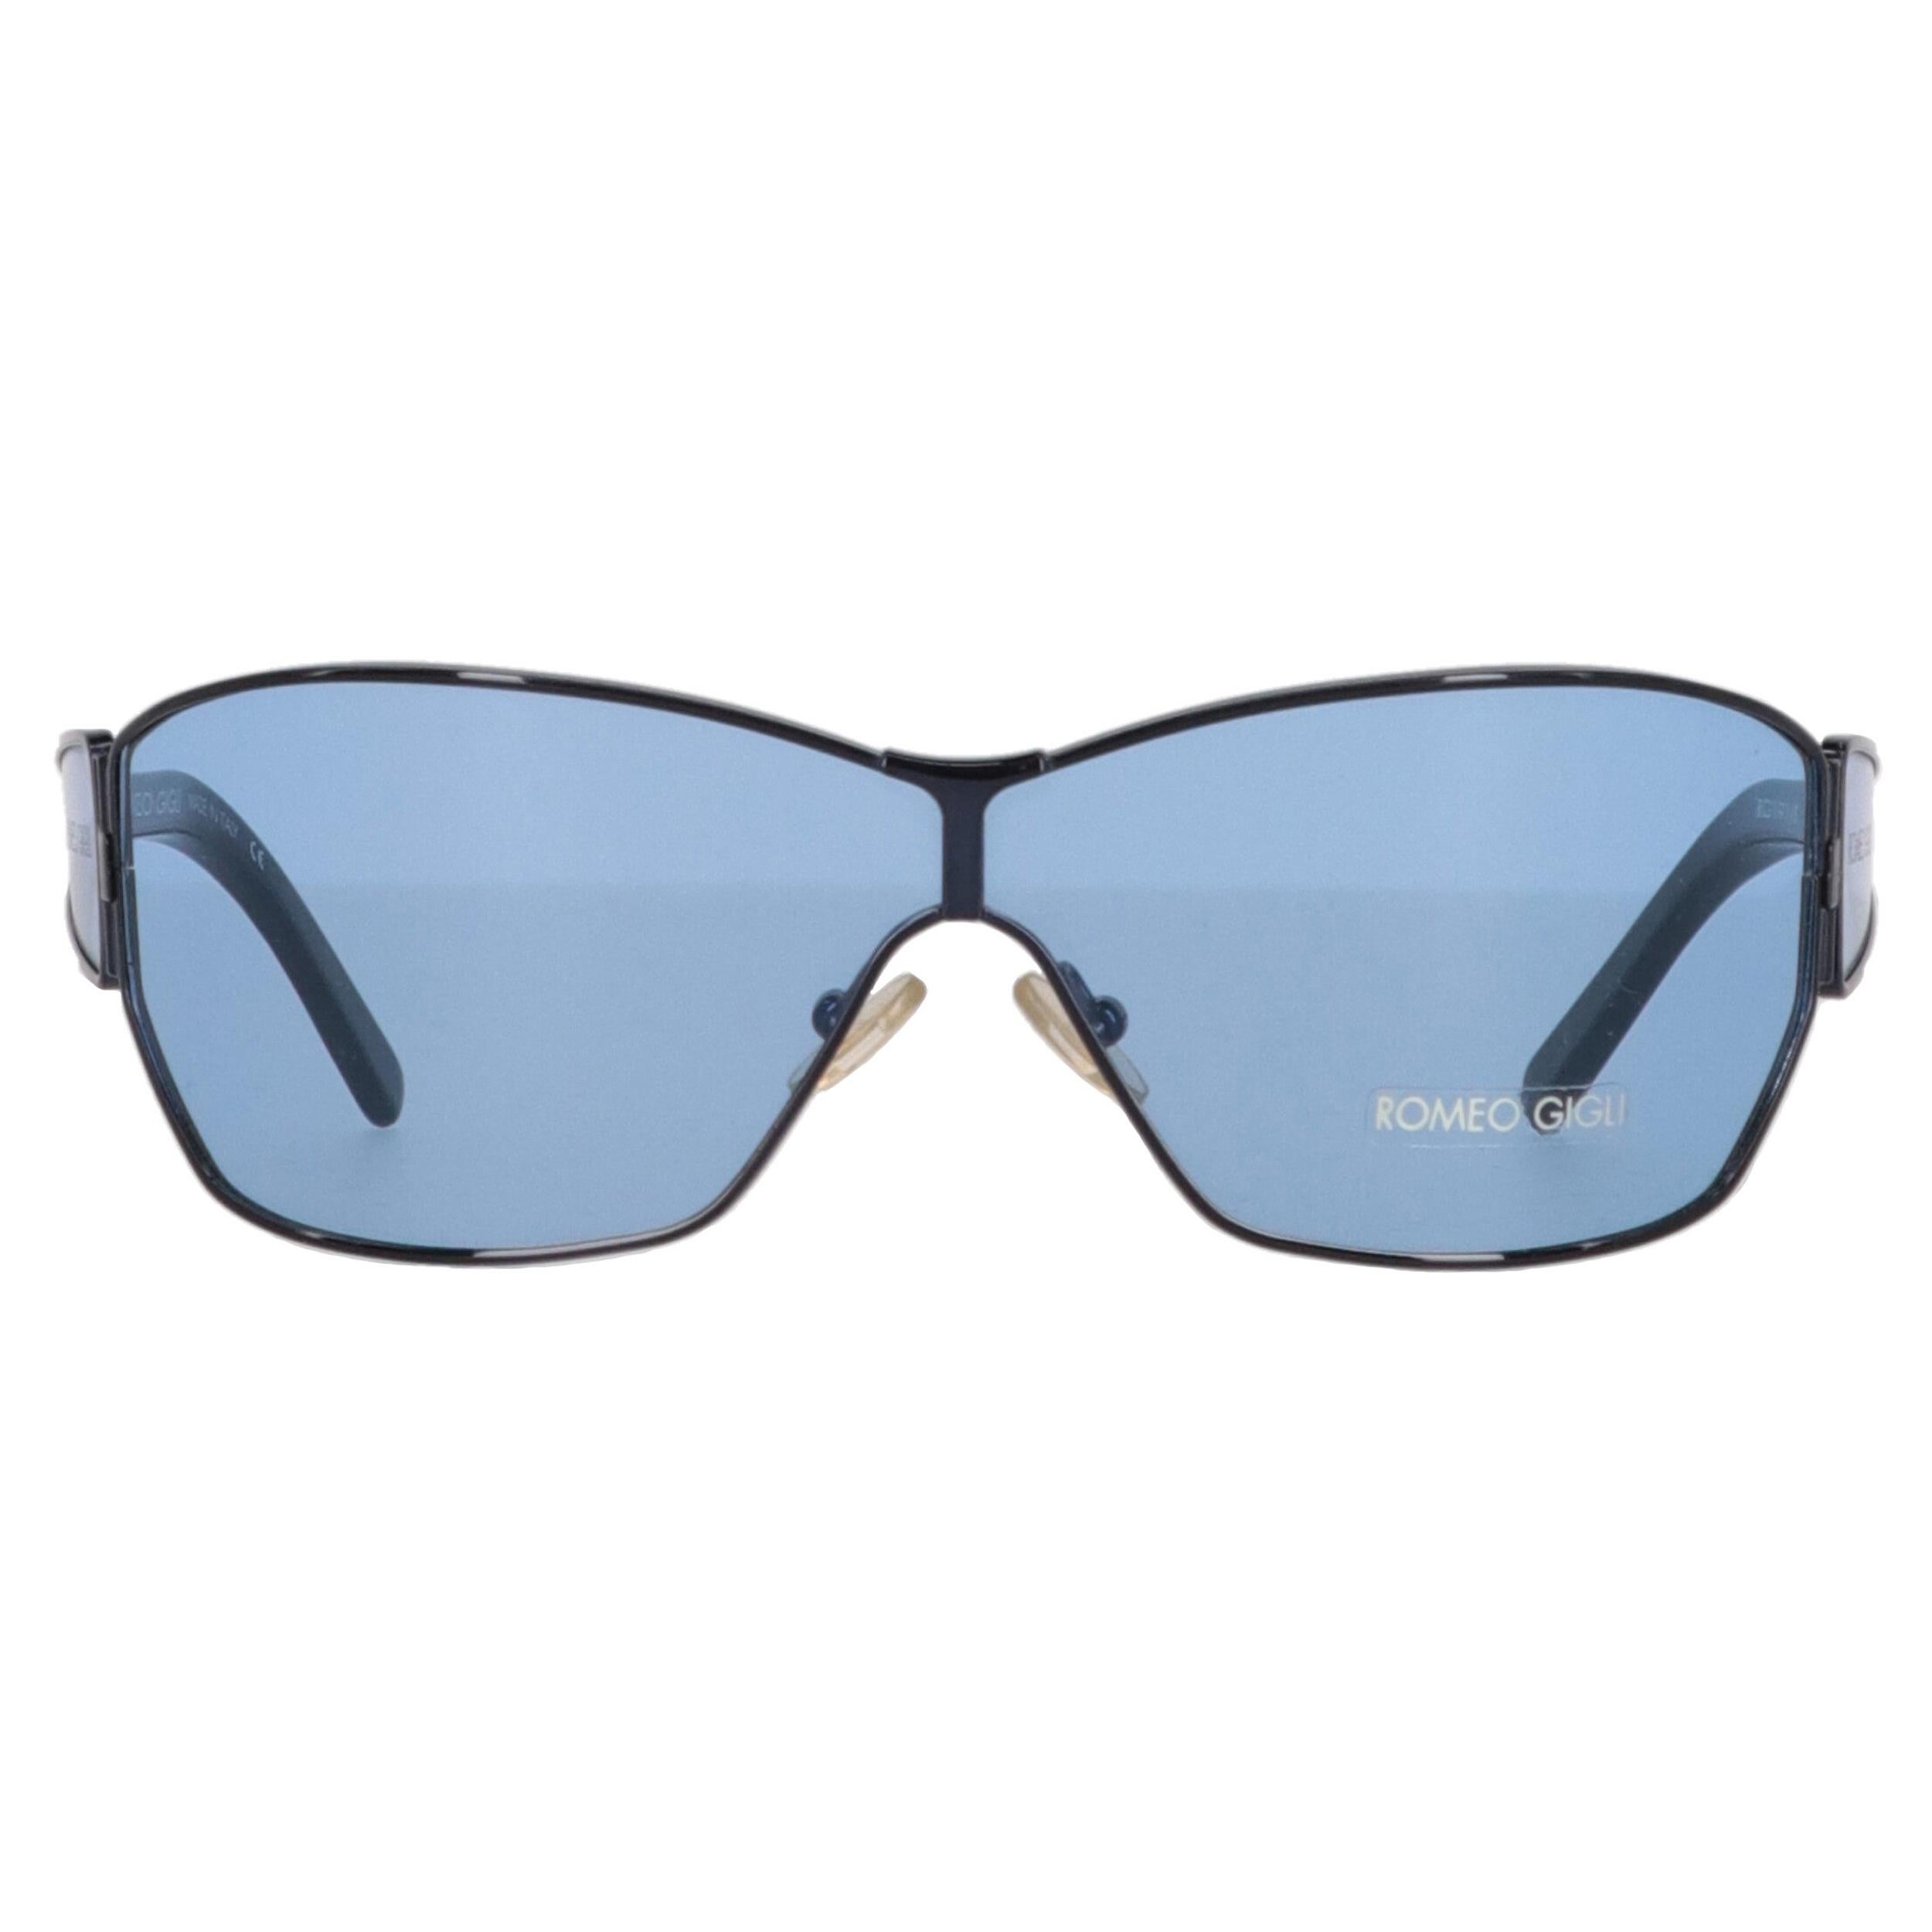 1990s Romeo Gigli Light Blue Sunglasses